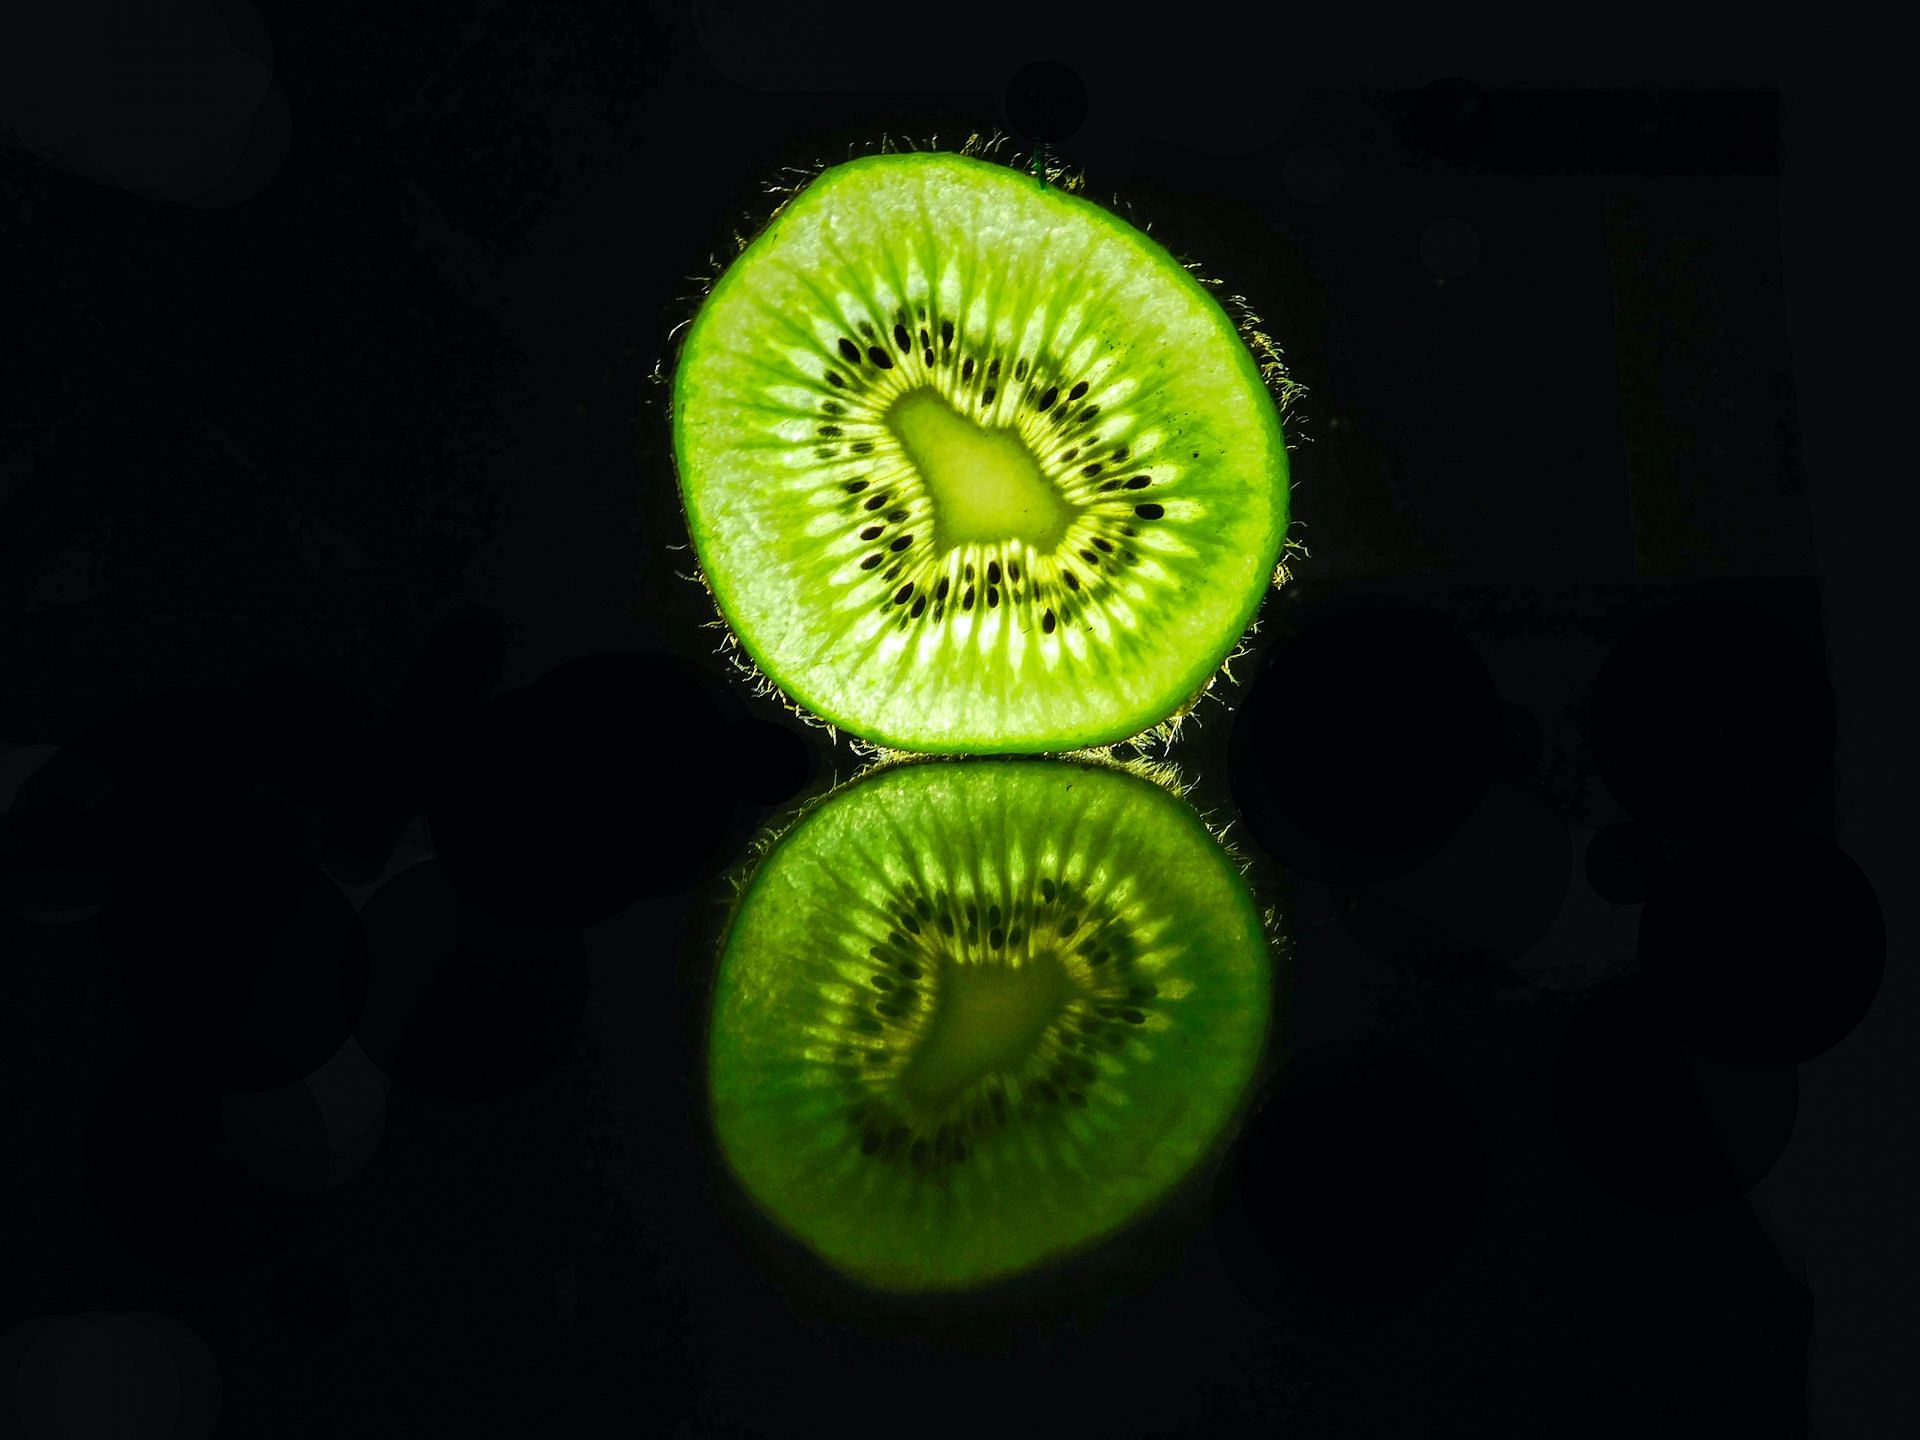 Kiwi seeds are good for health. (Image via Unsplash/ Sweta Verma)